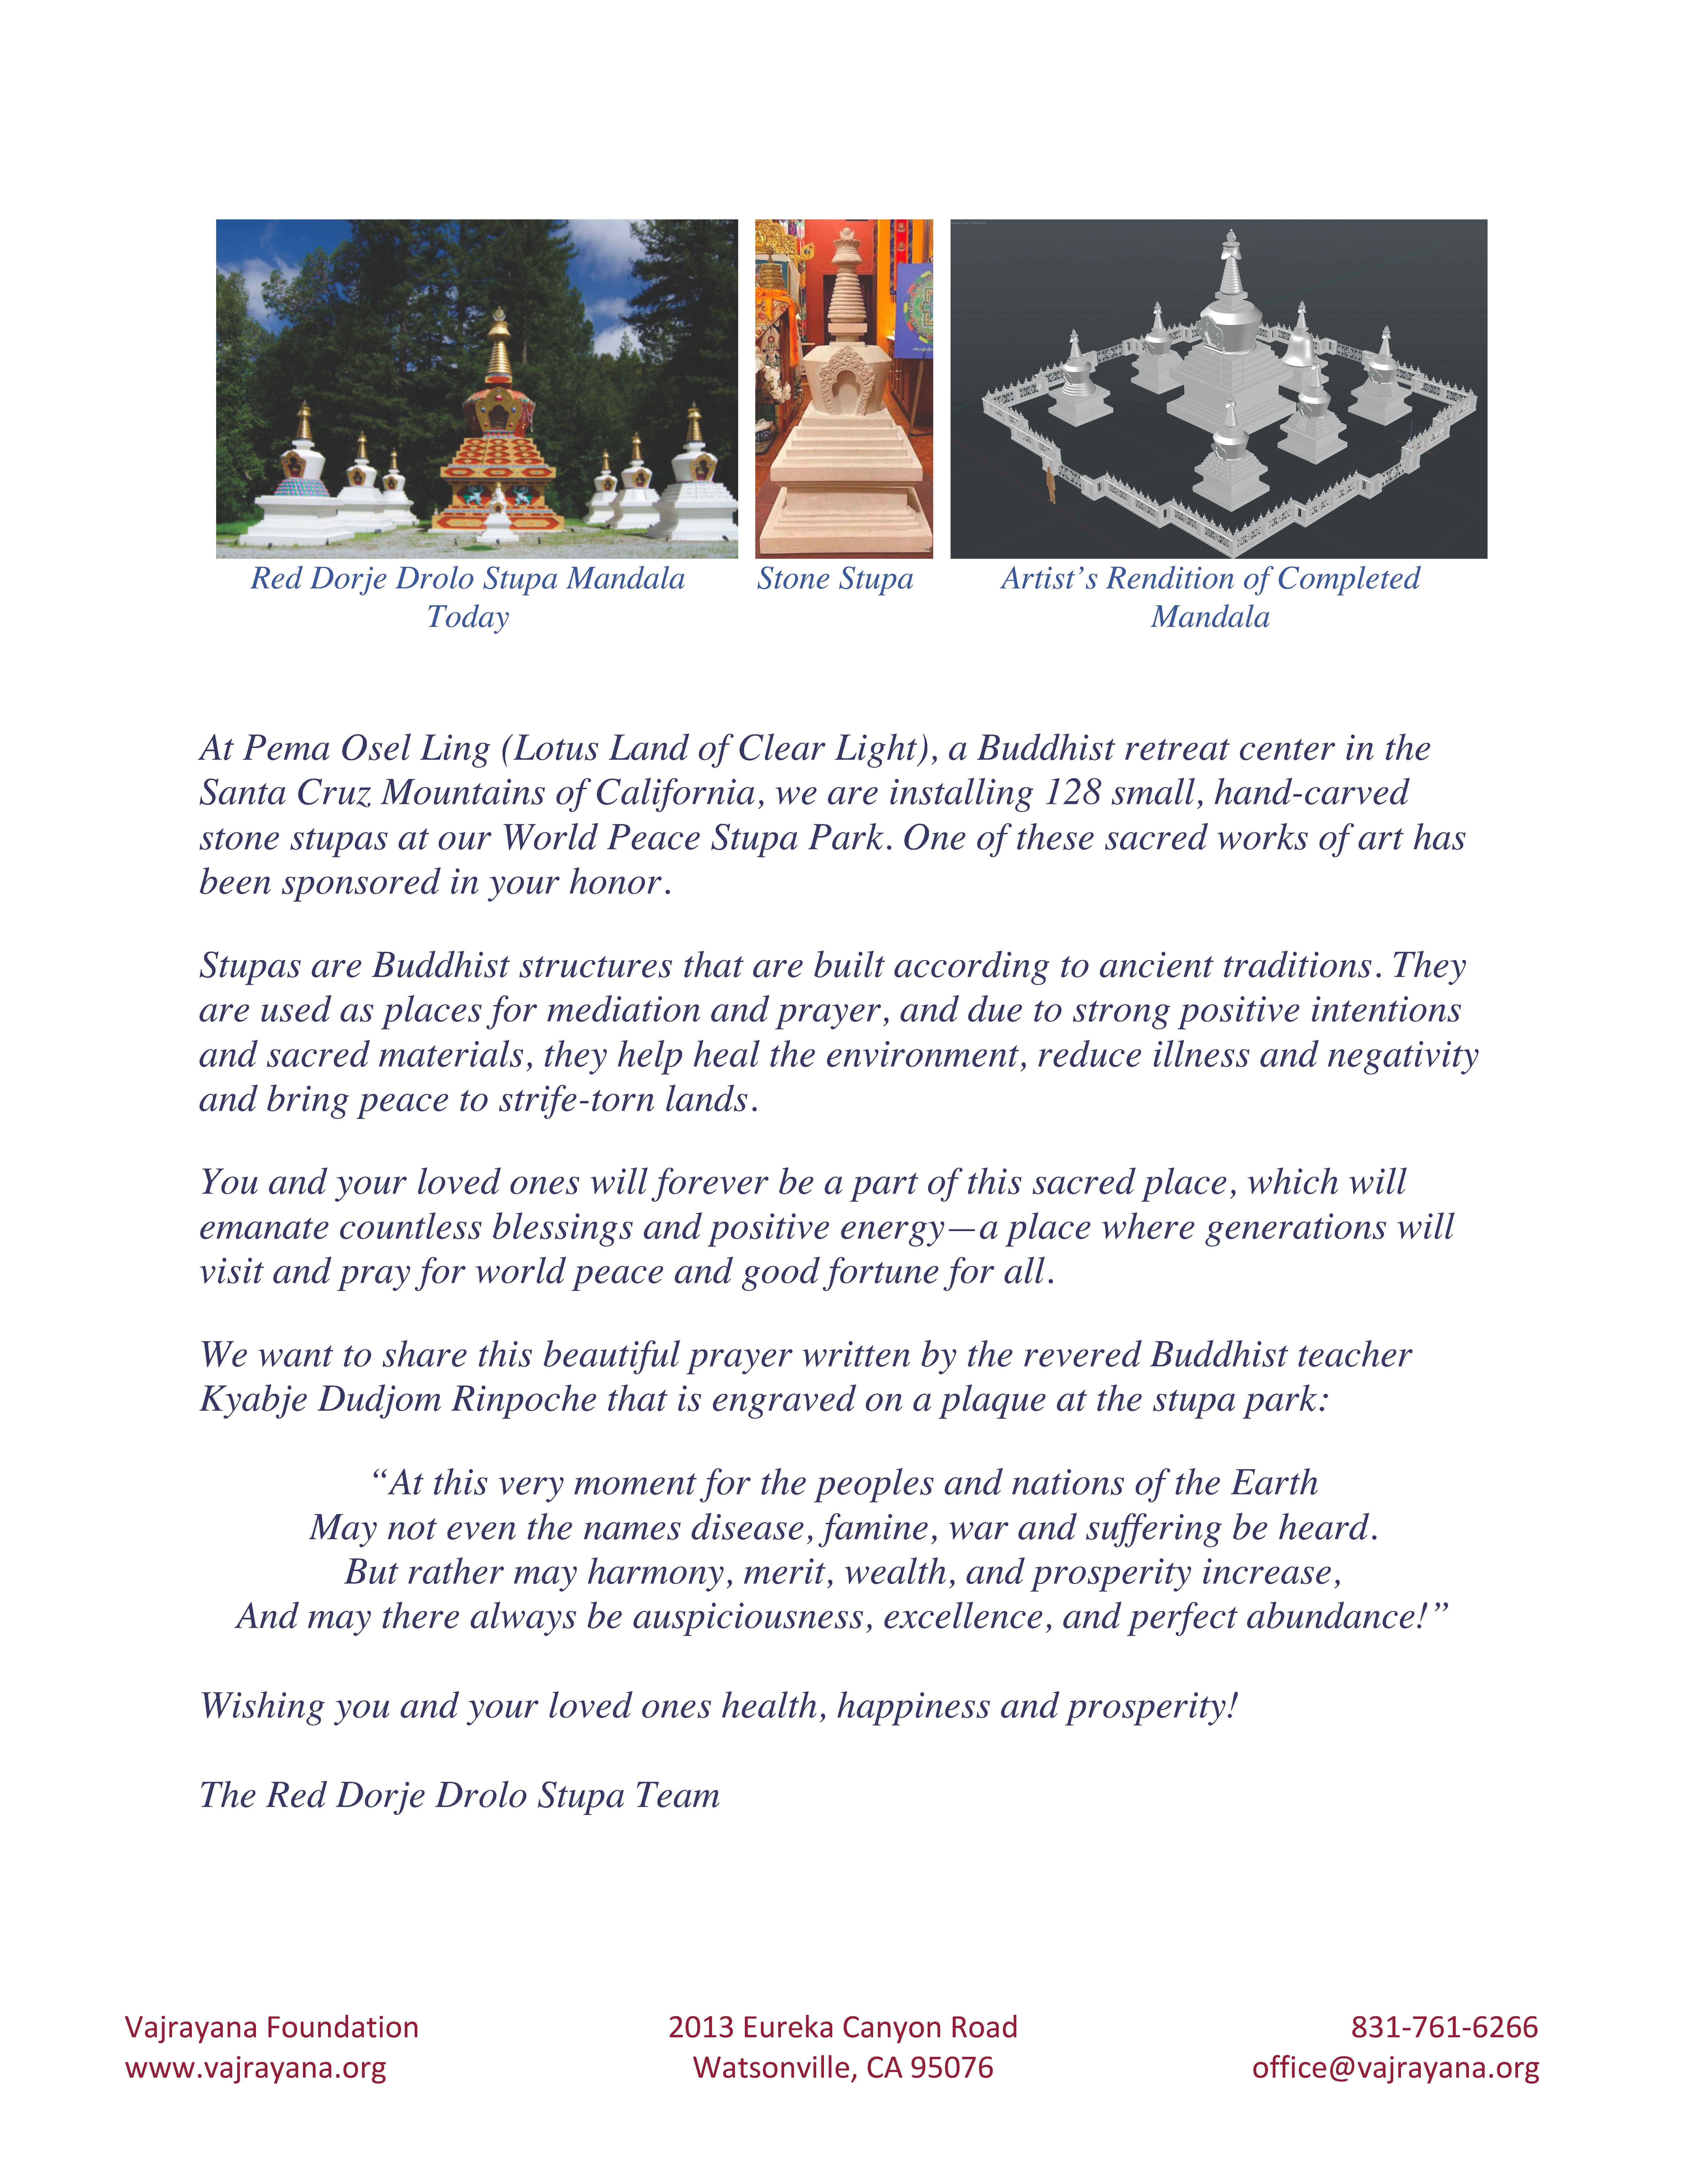 Card for Small Stupas